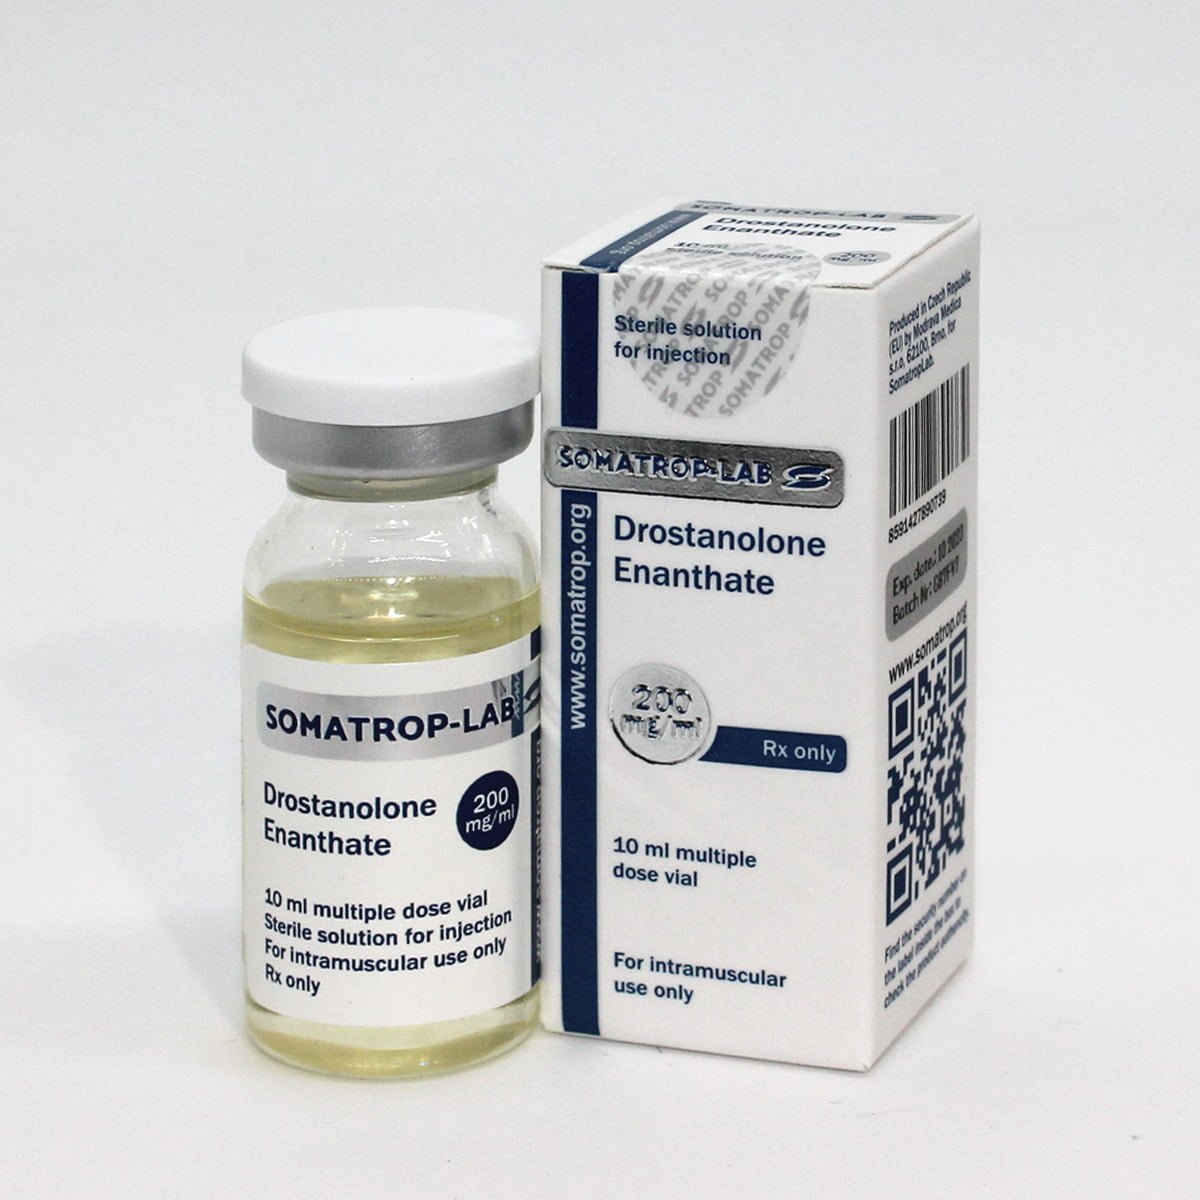 Somatrop-Lab Drostanolone Enanthate